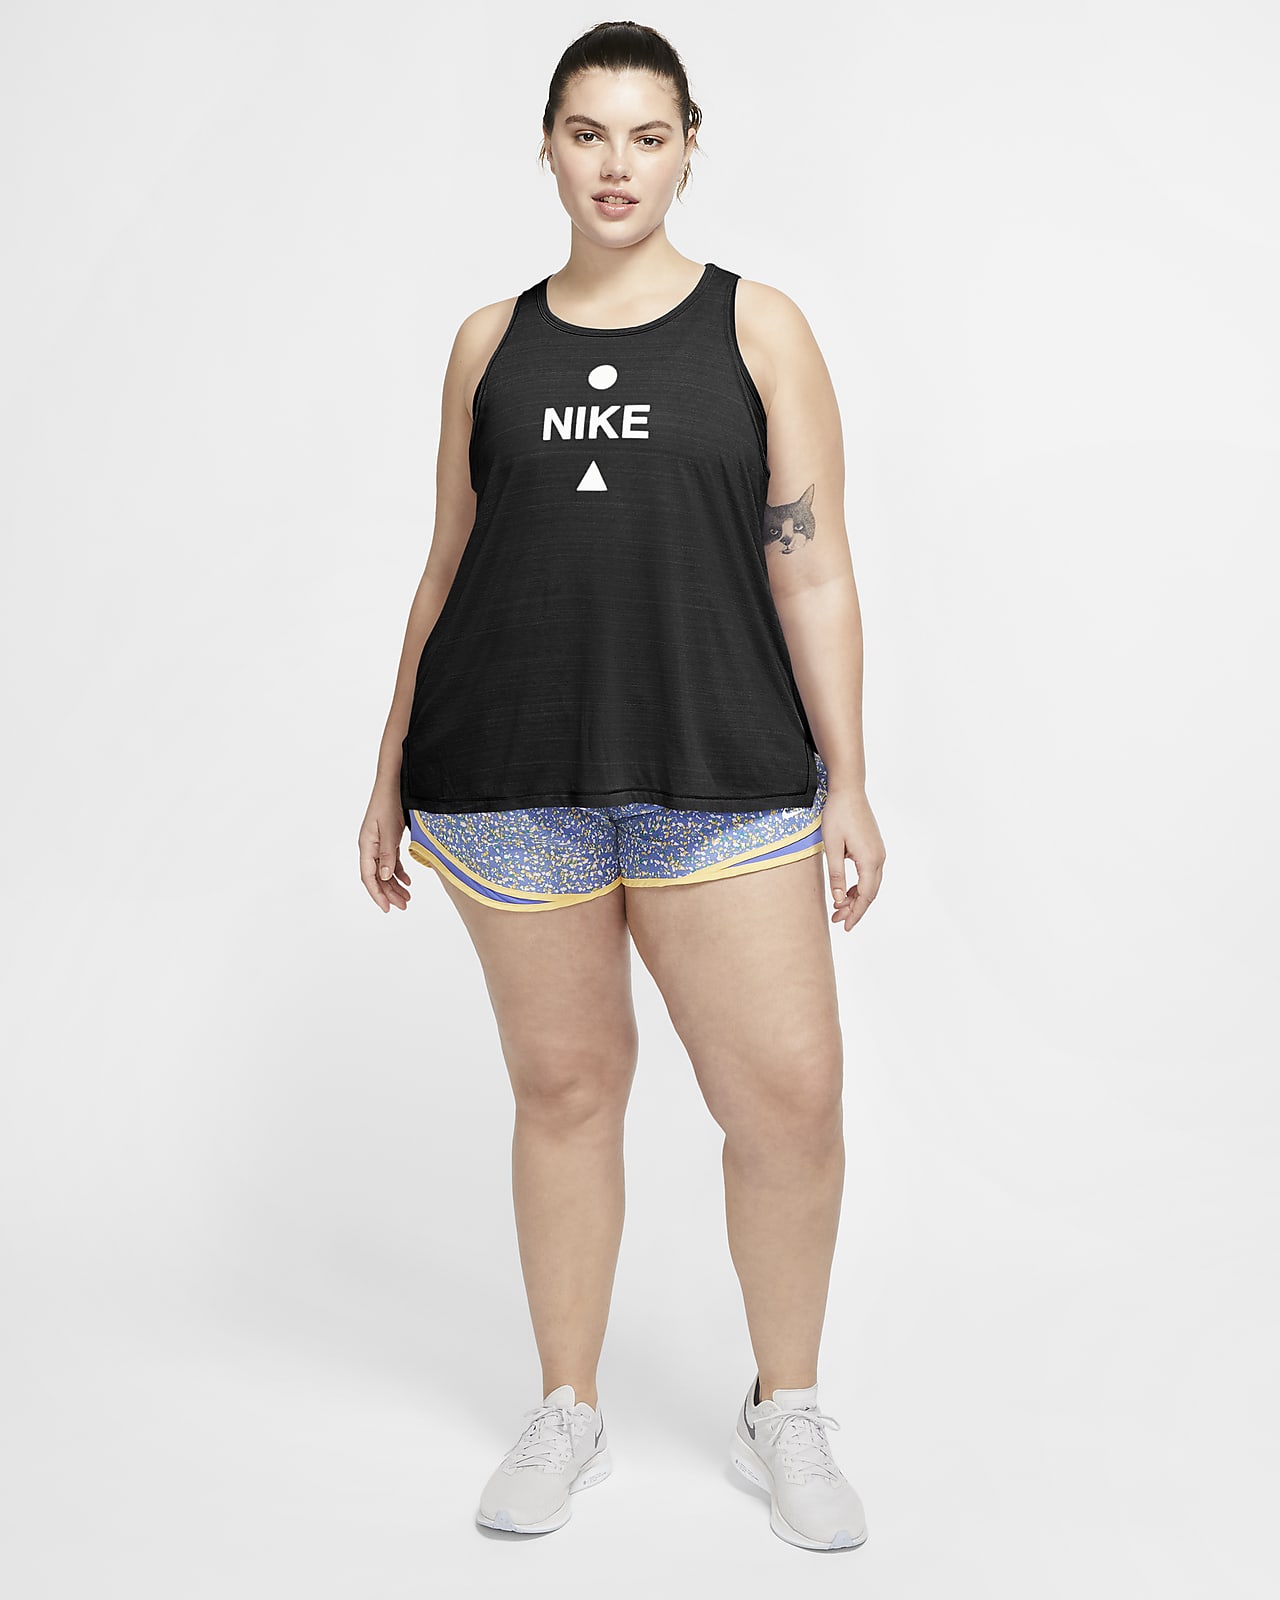 nike women's plus size tank tops